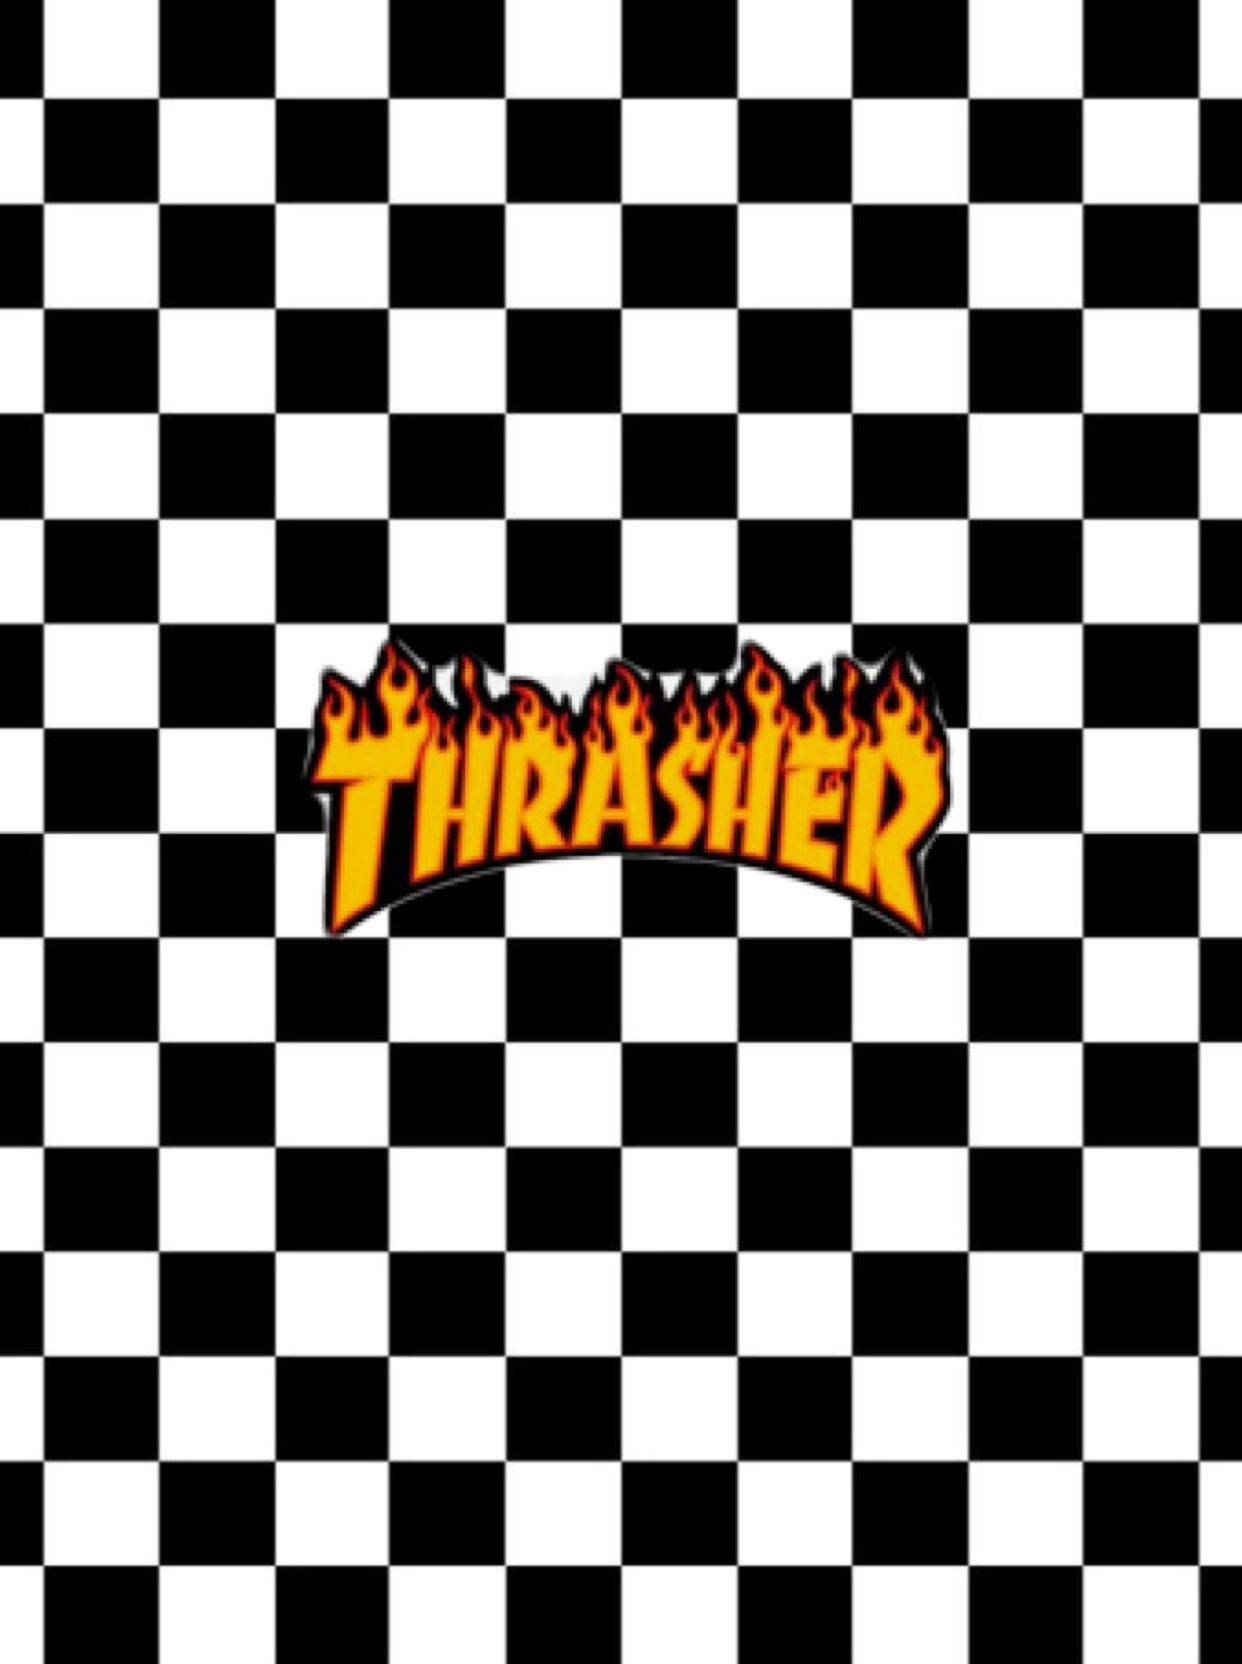 Good Wallpaper Fire Thrasher  Thrasher Magazine Logo  750x1334 PNG  Download  PNGkit